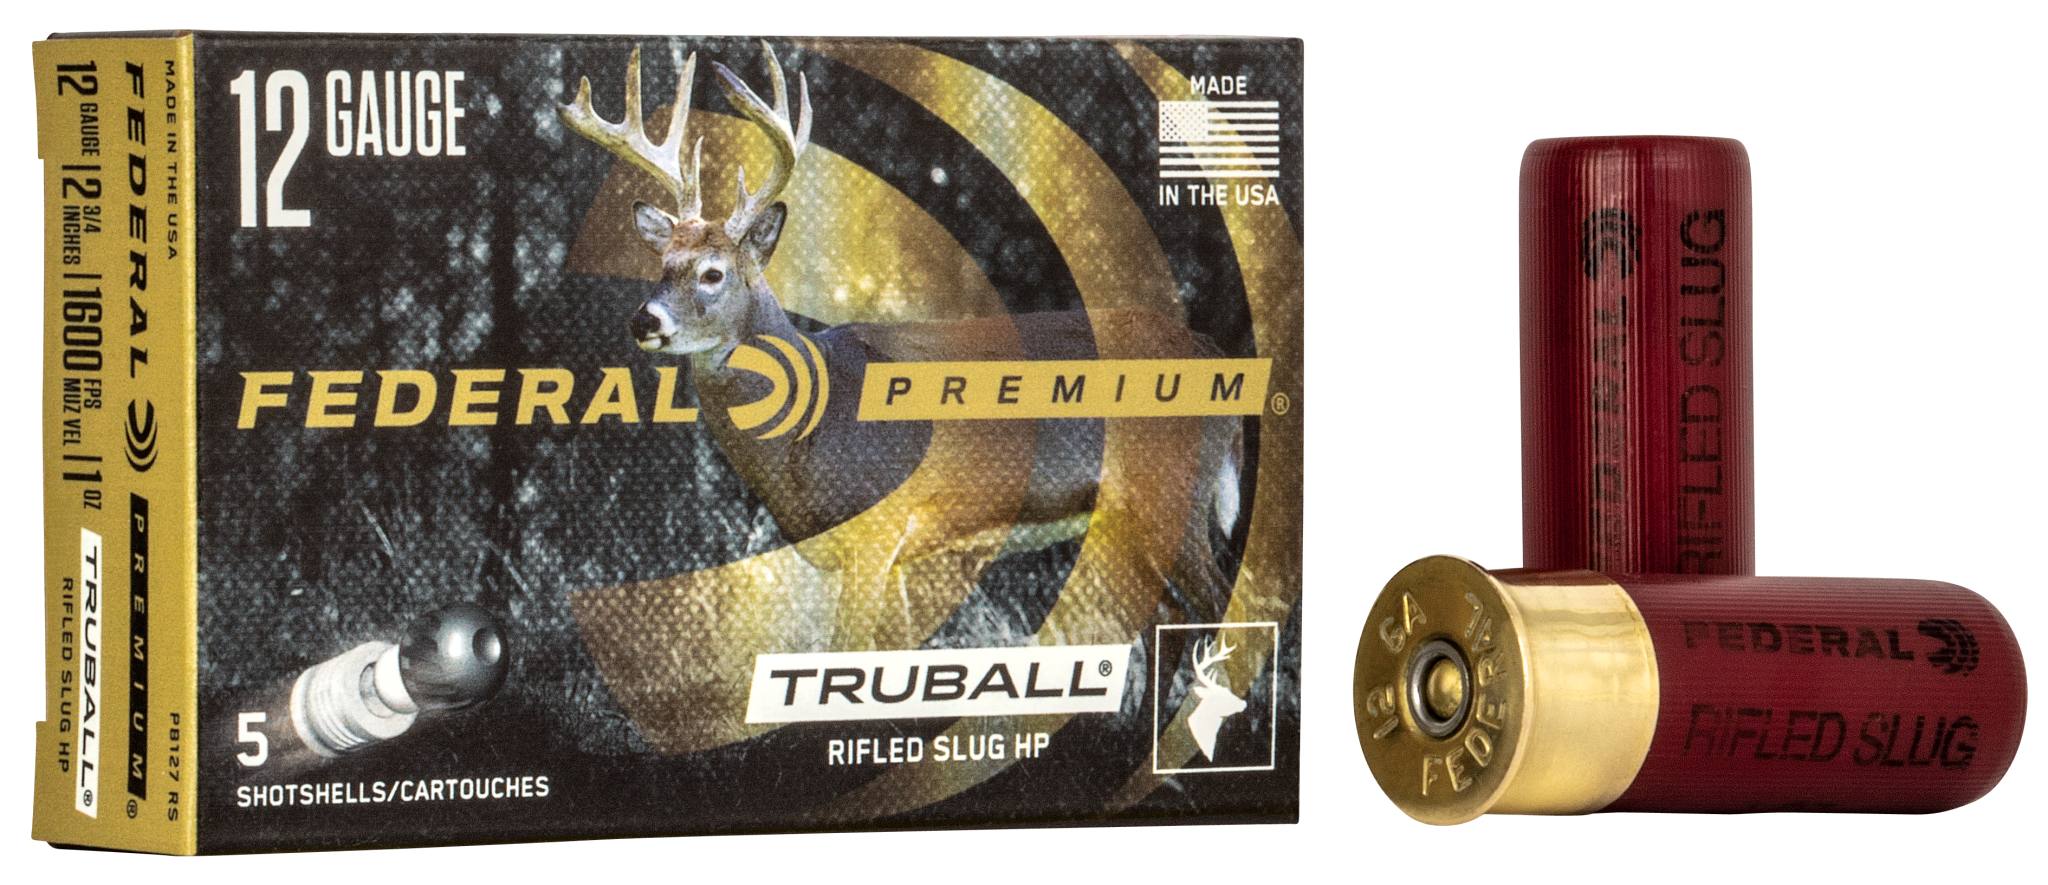 Buy TruBall Rifled Slug for USD 7.99